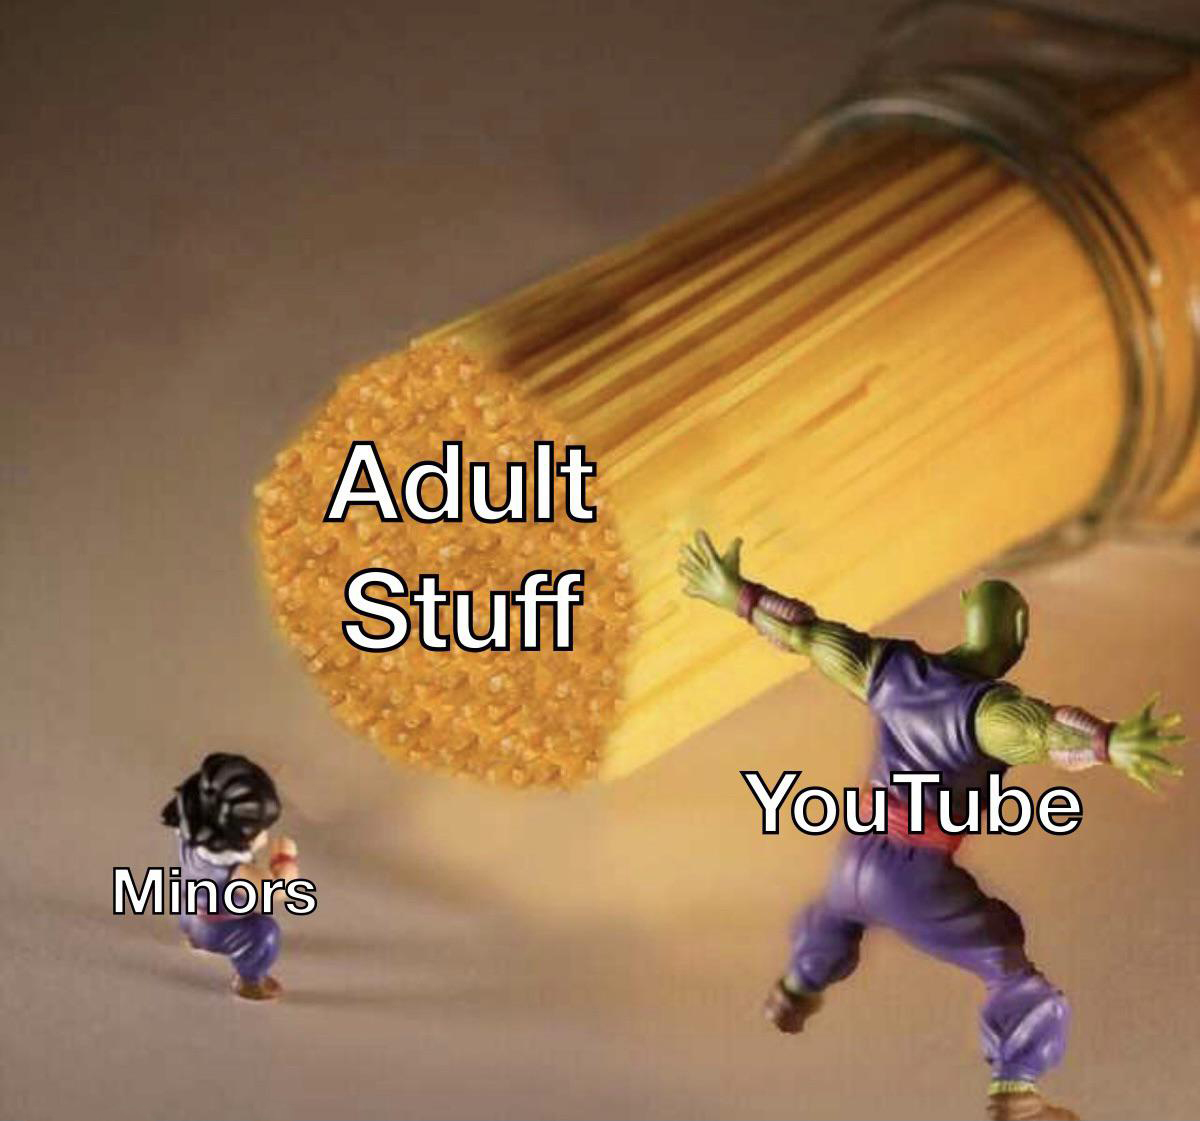 free minecraft no virus meme - Adult Stuff YouTube Minors